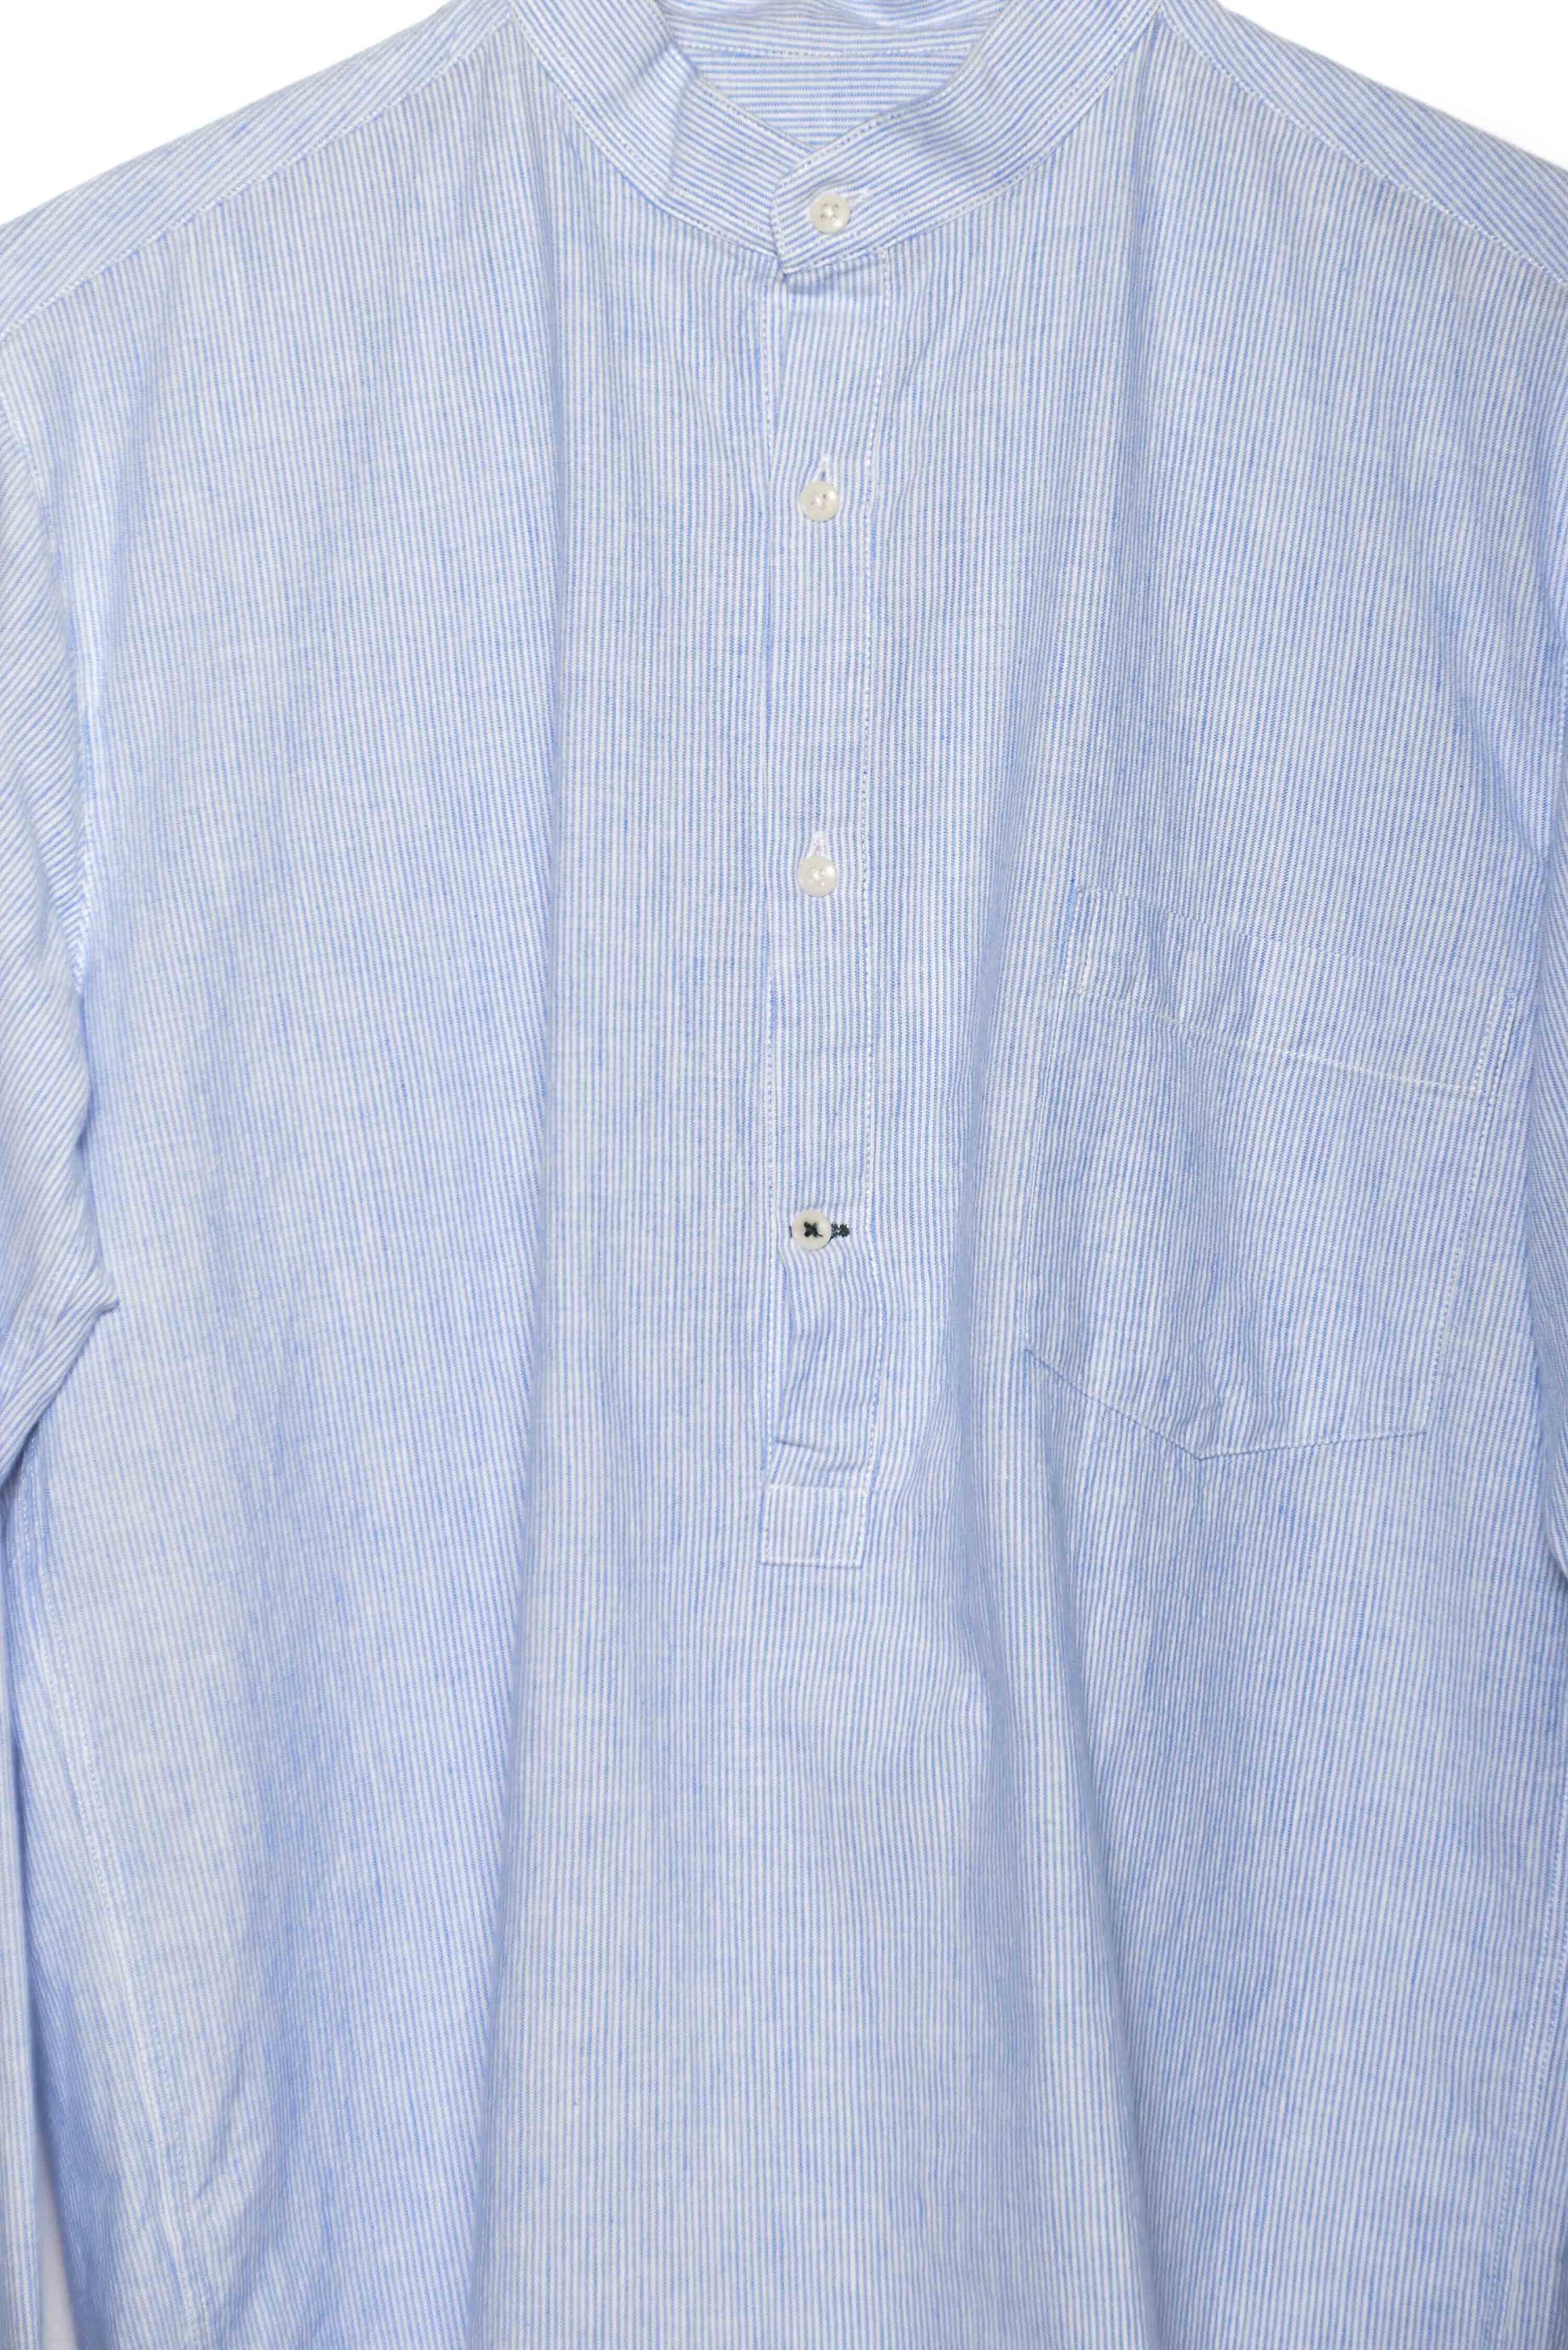 Carpasus Pullover Shirt Marzili blue stripes